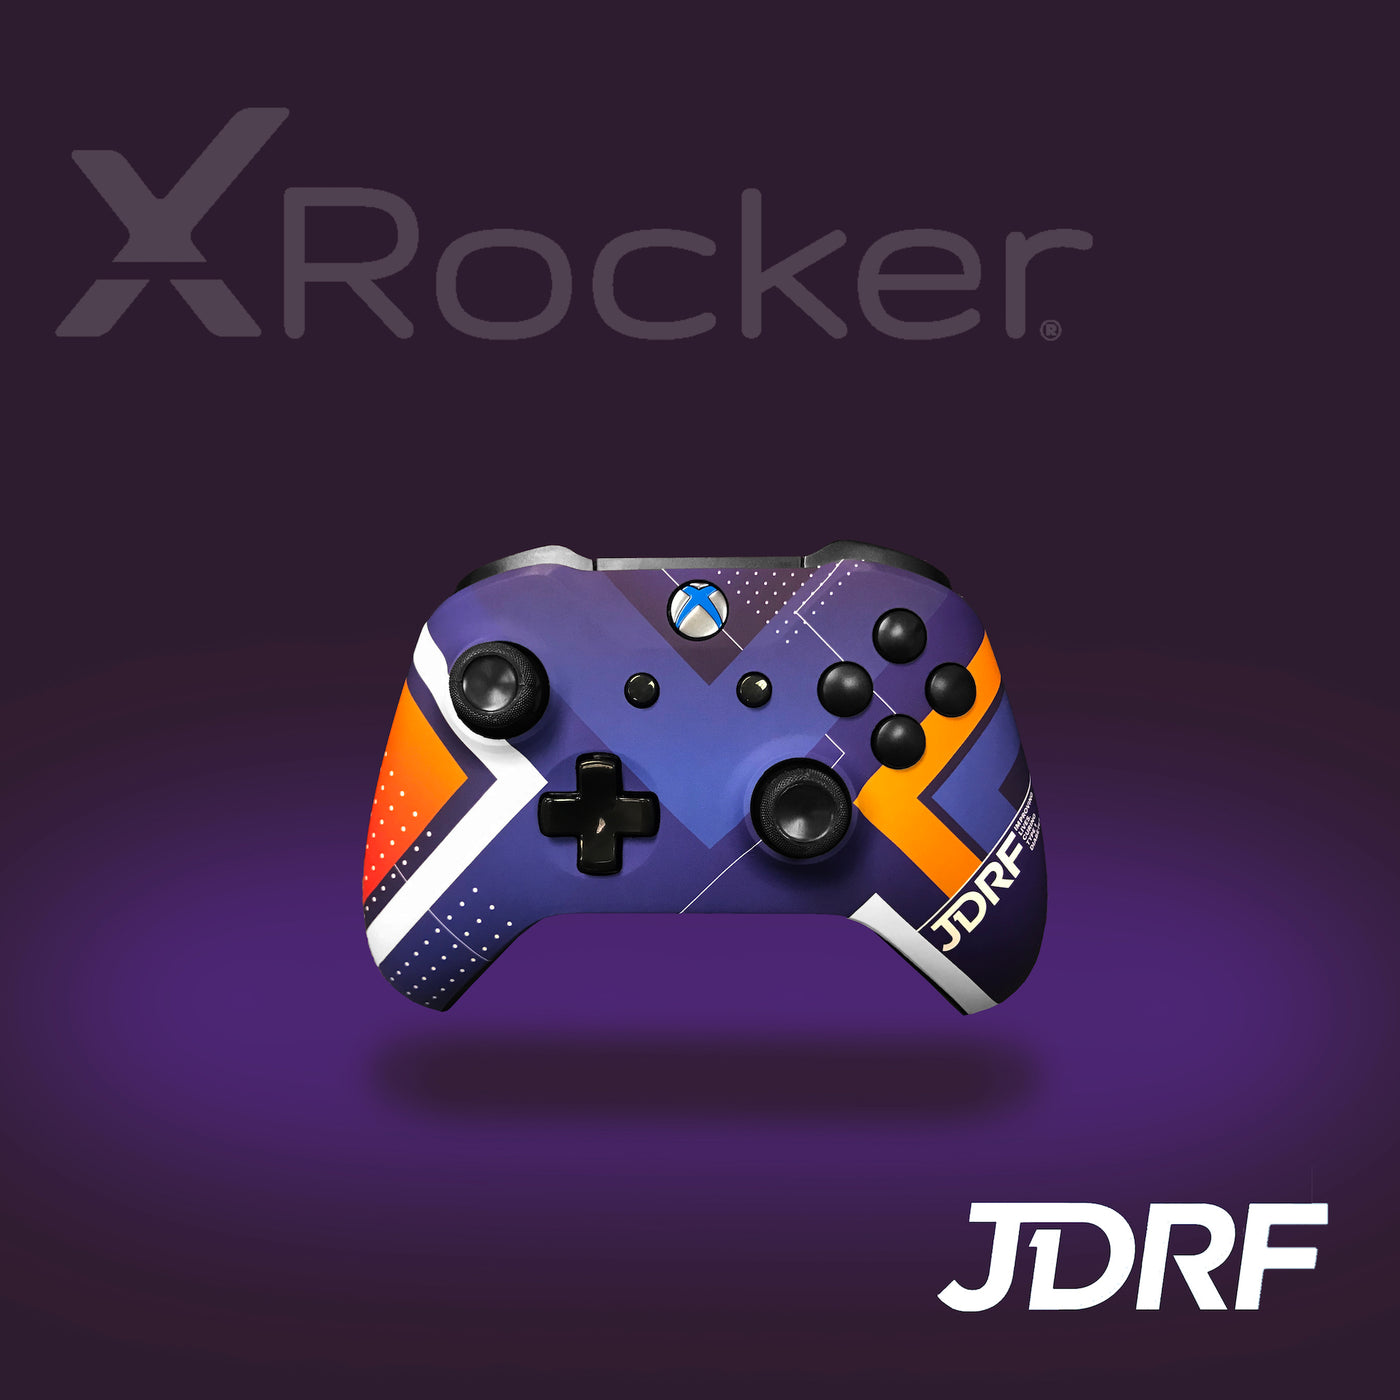 X Rocker x JDRF